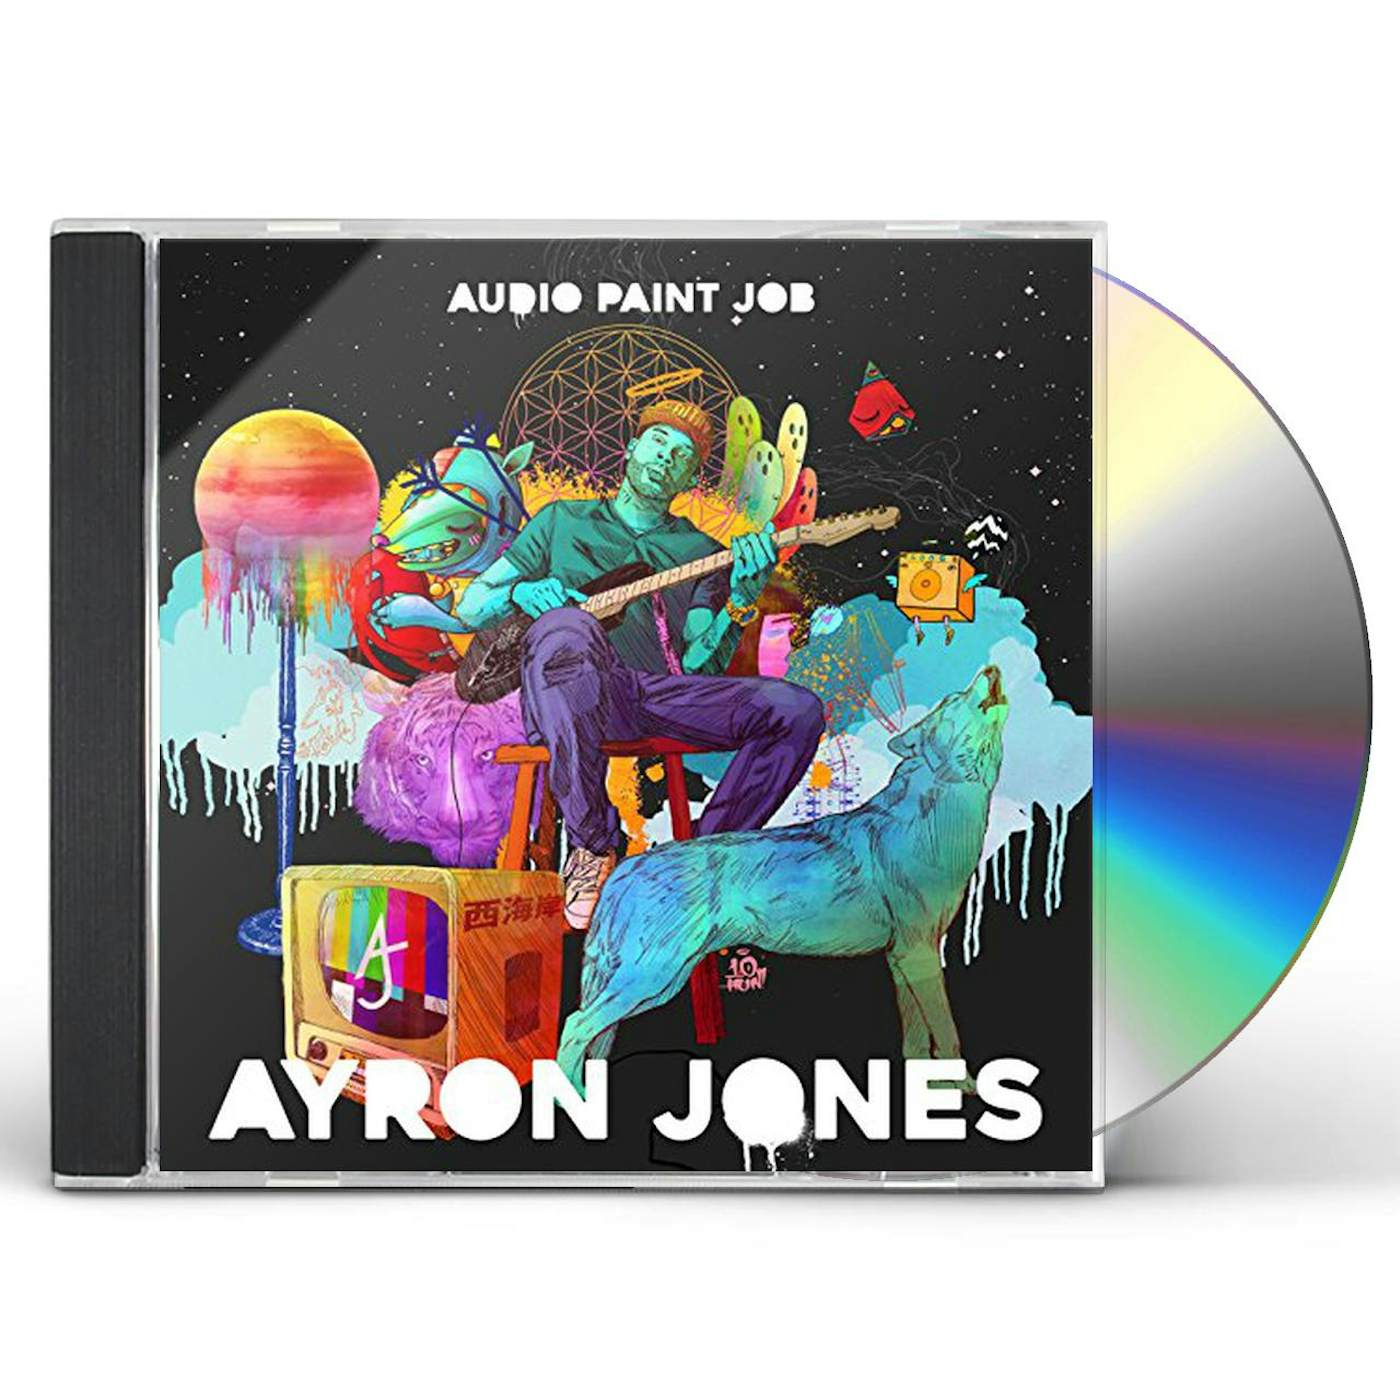 Ayron Jones AUDIO PAINT JOB CD